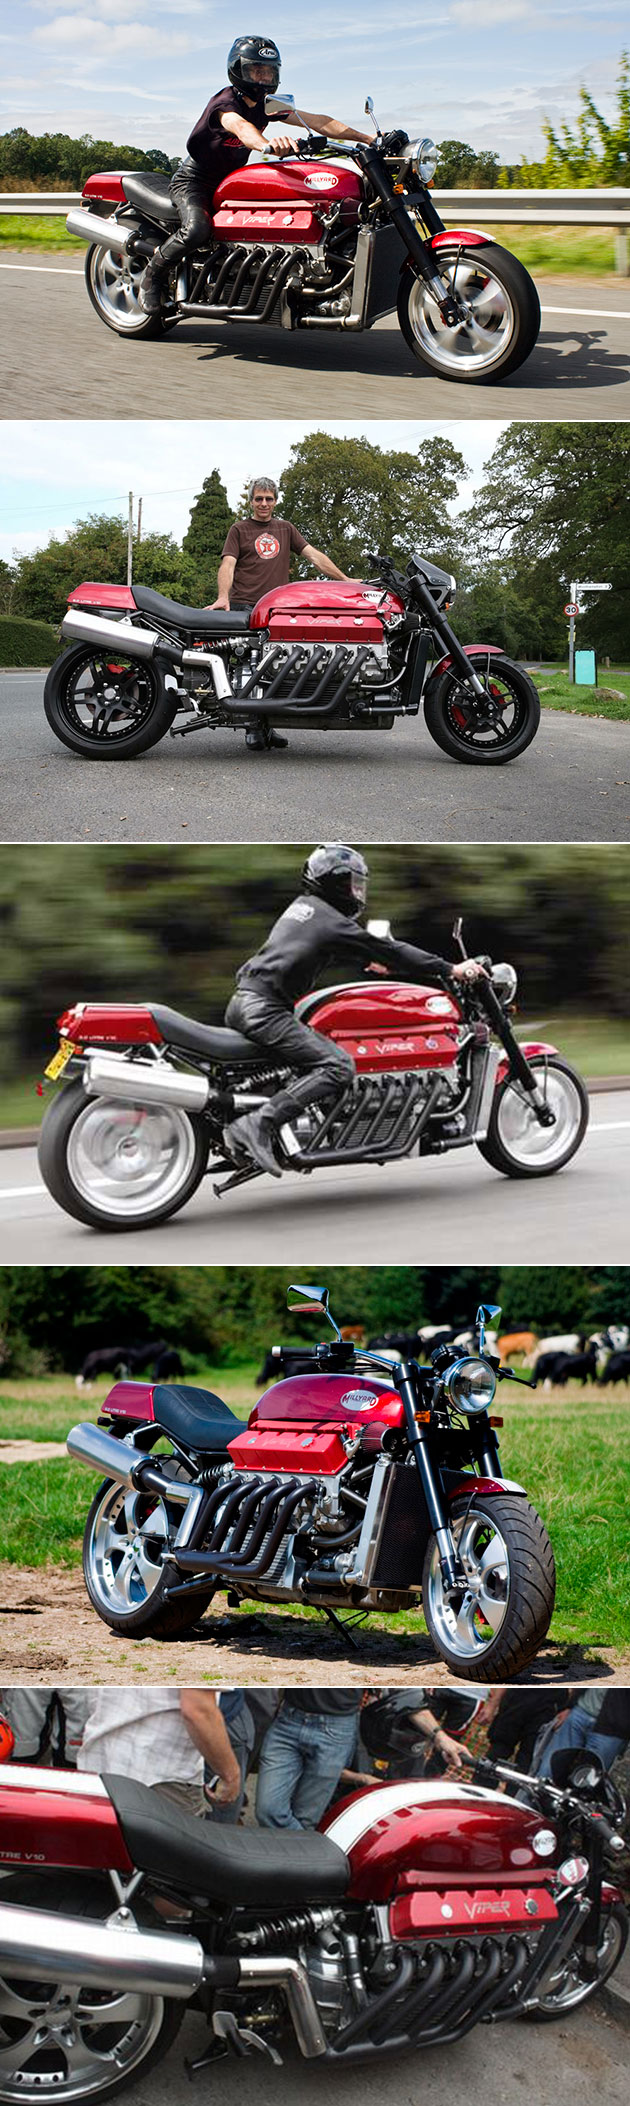 millyard-viper-v10-motorcycle